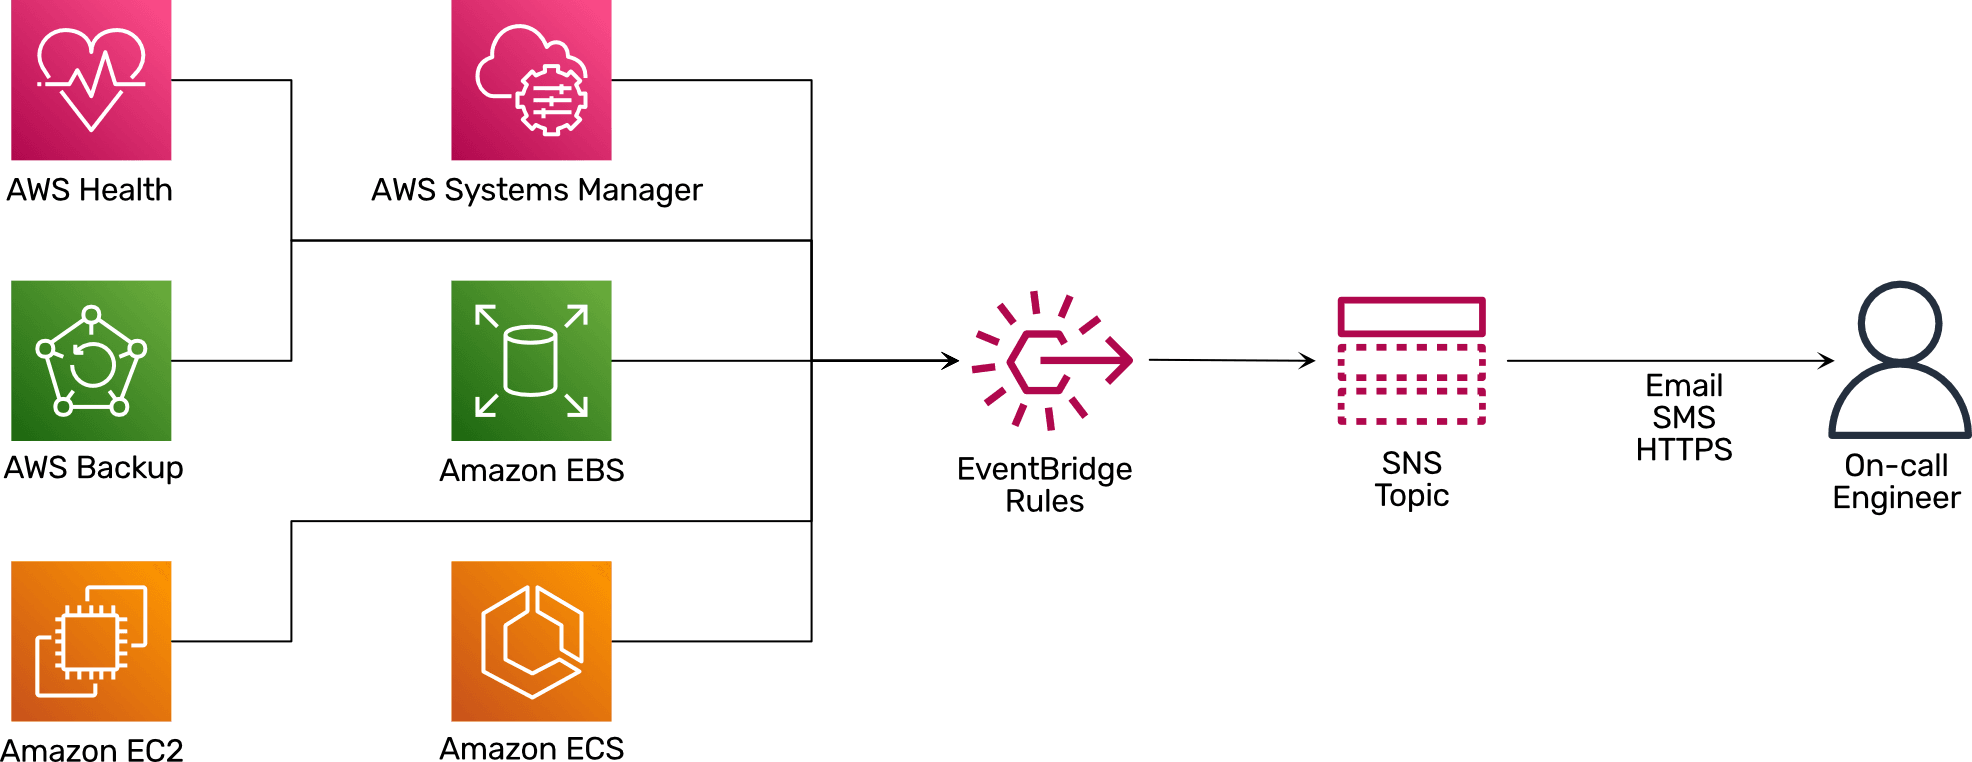 AWS Monitoring with EventBridge: Architecture